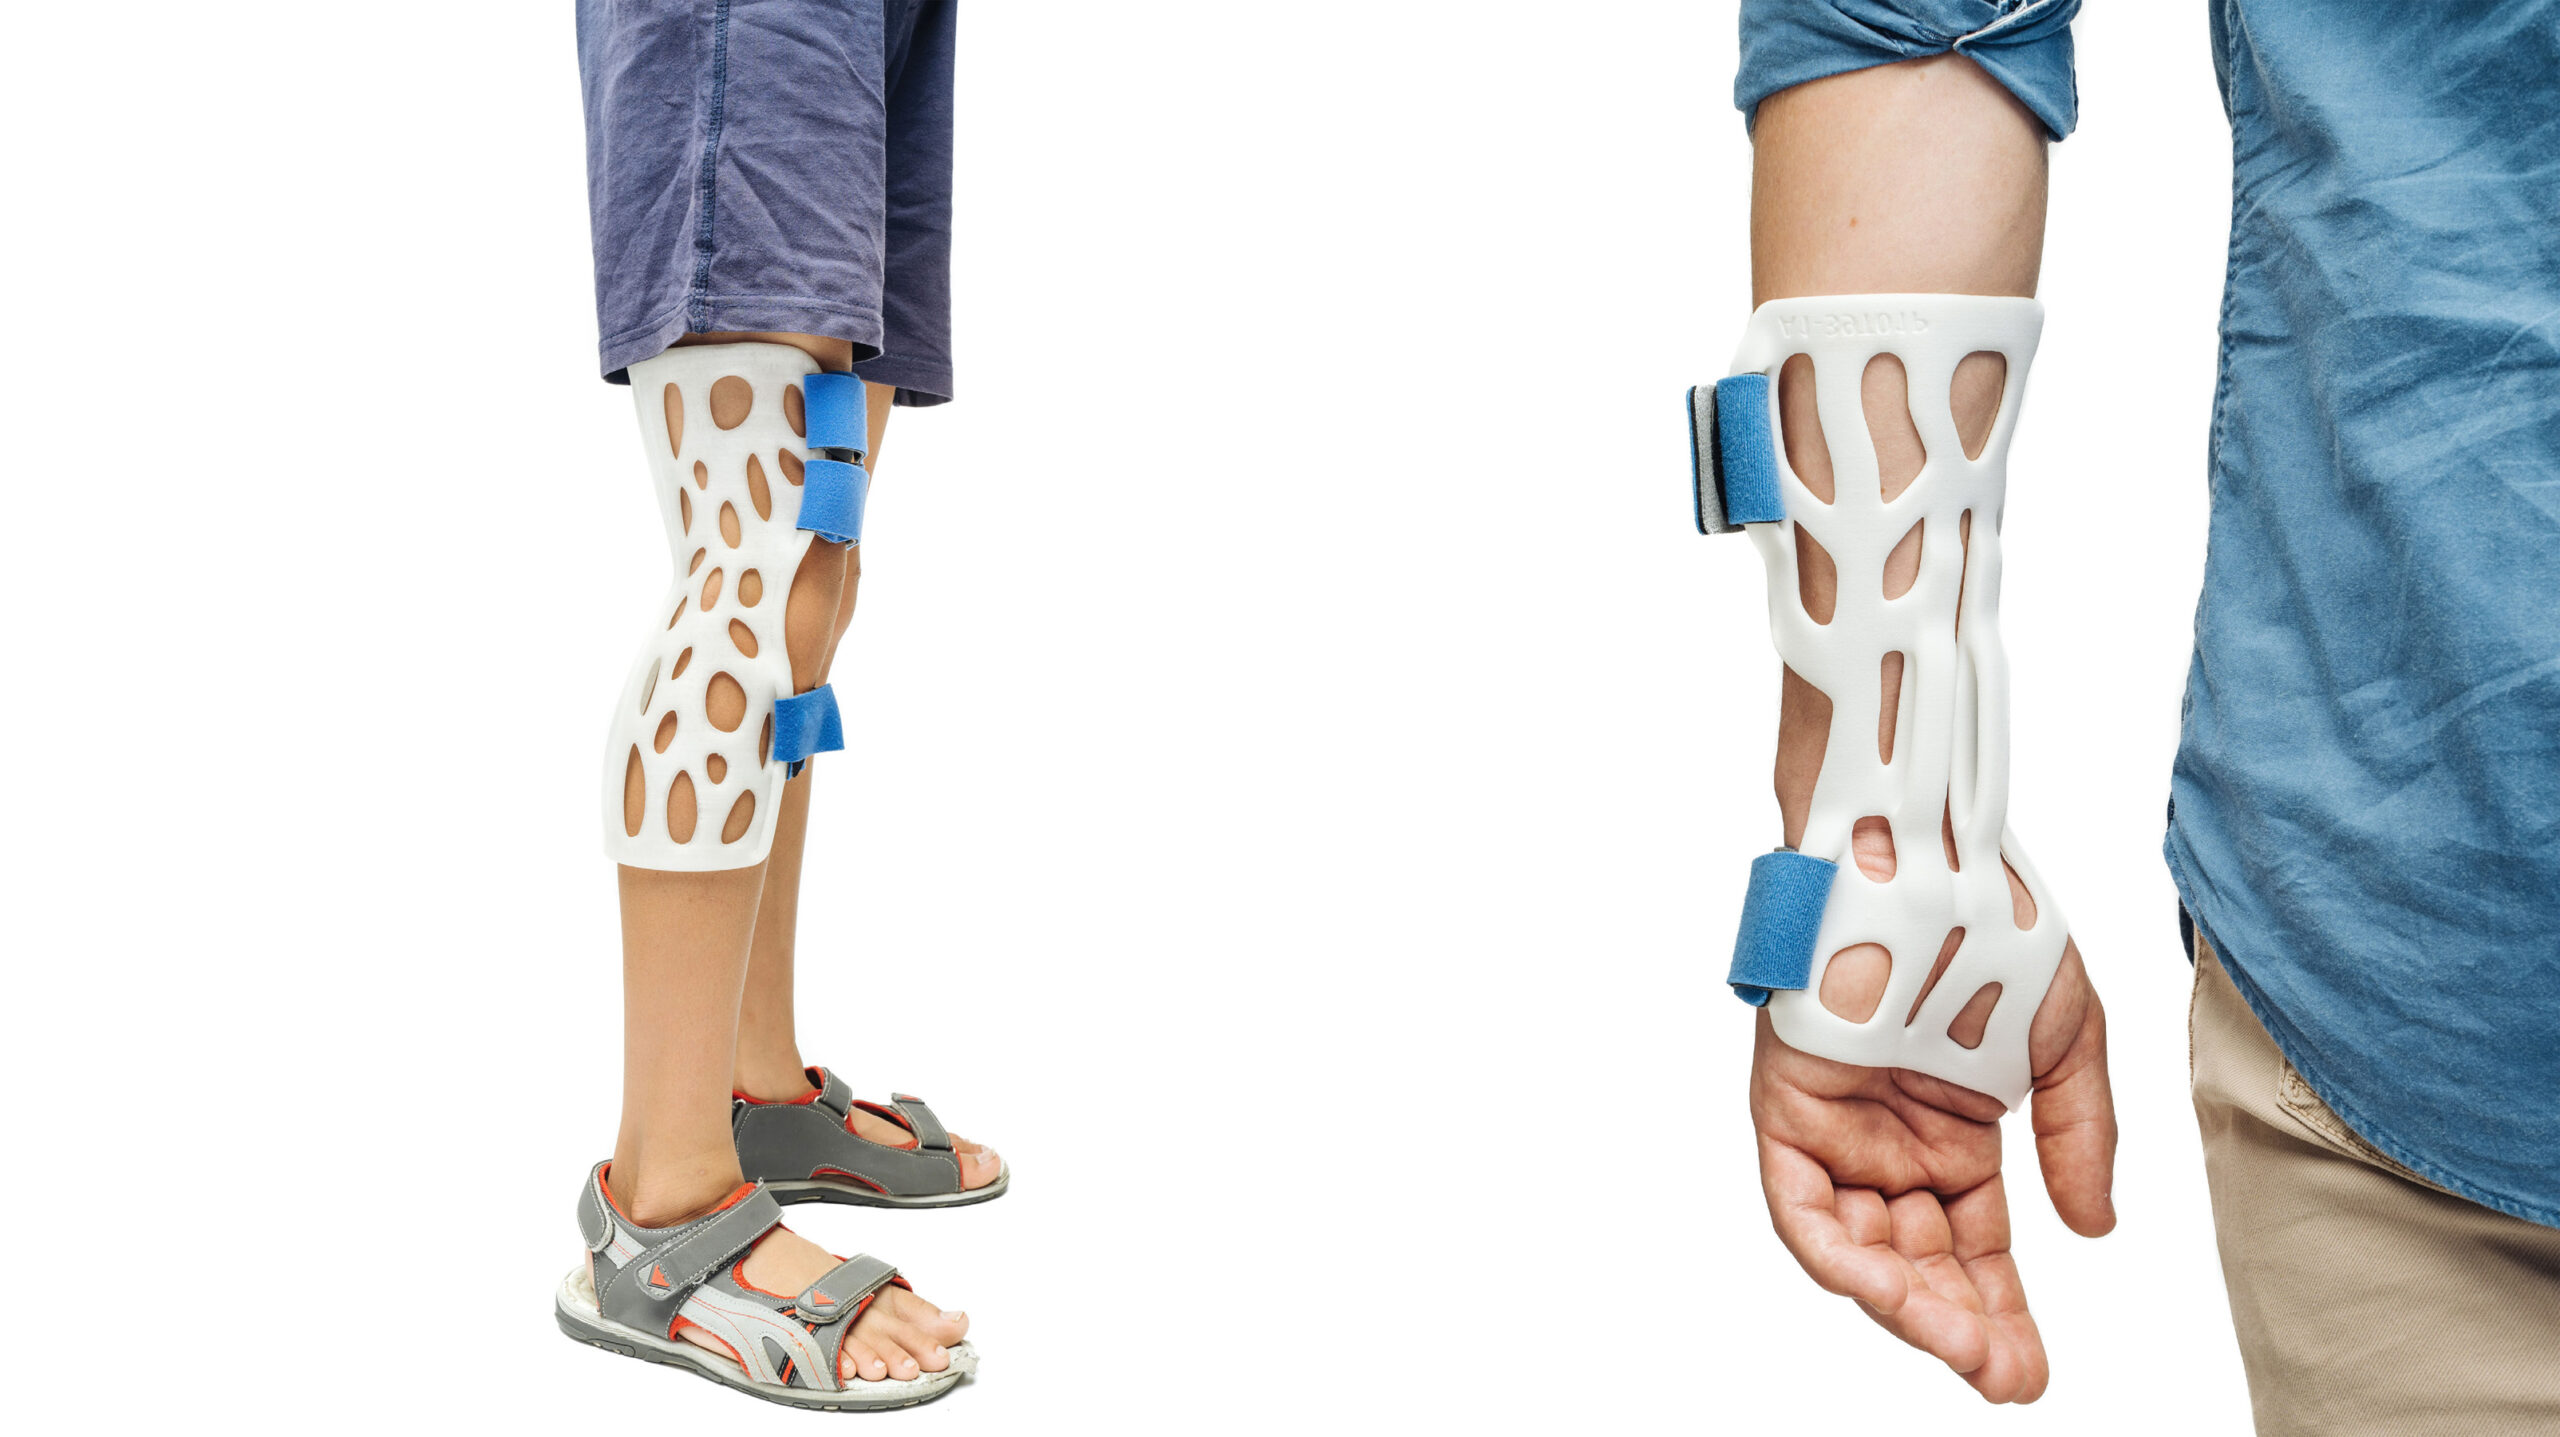 INFINITE TECHNOLOGIES - Full Leg Orthotics